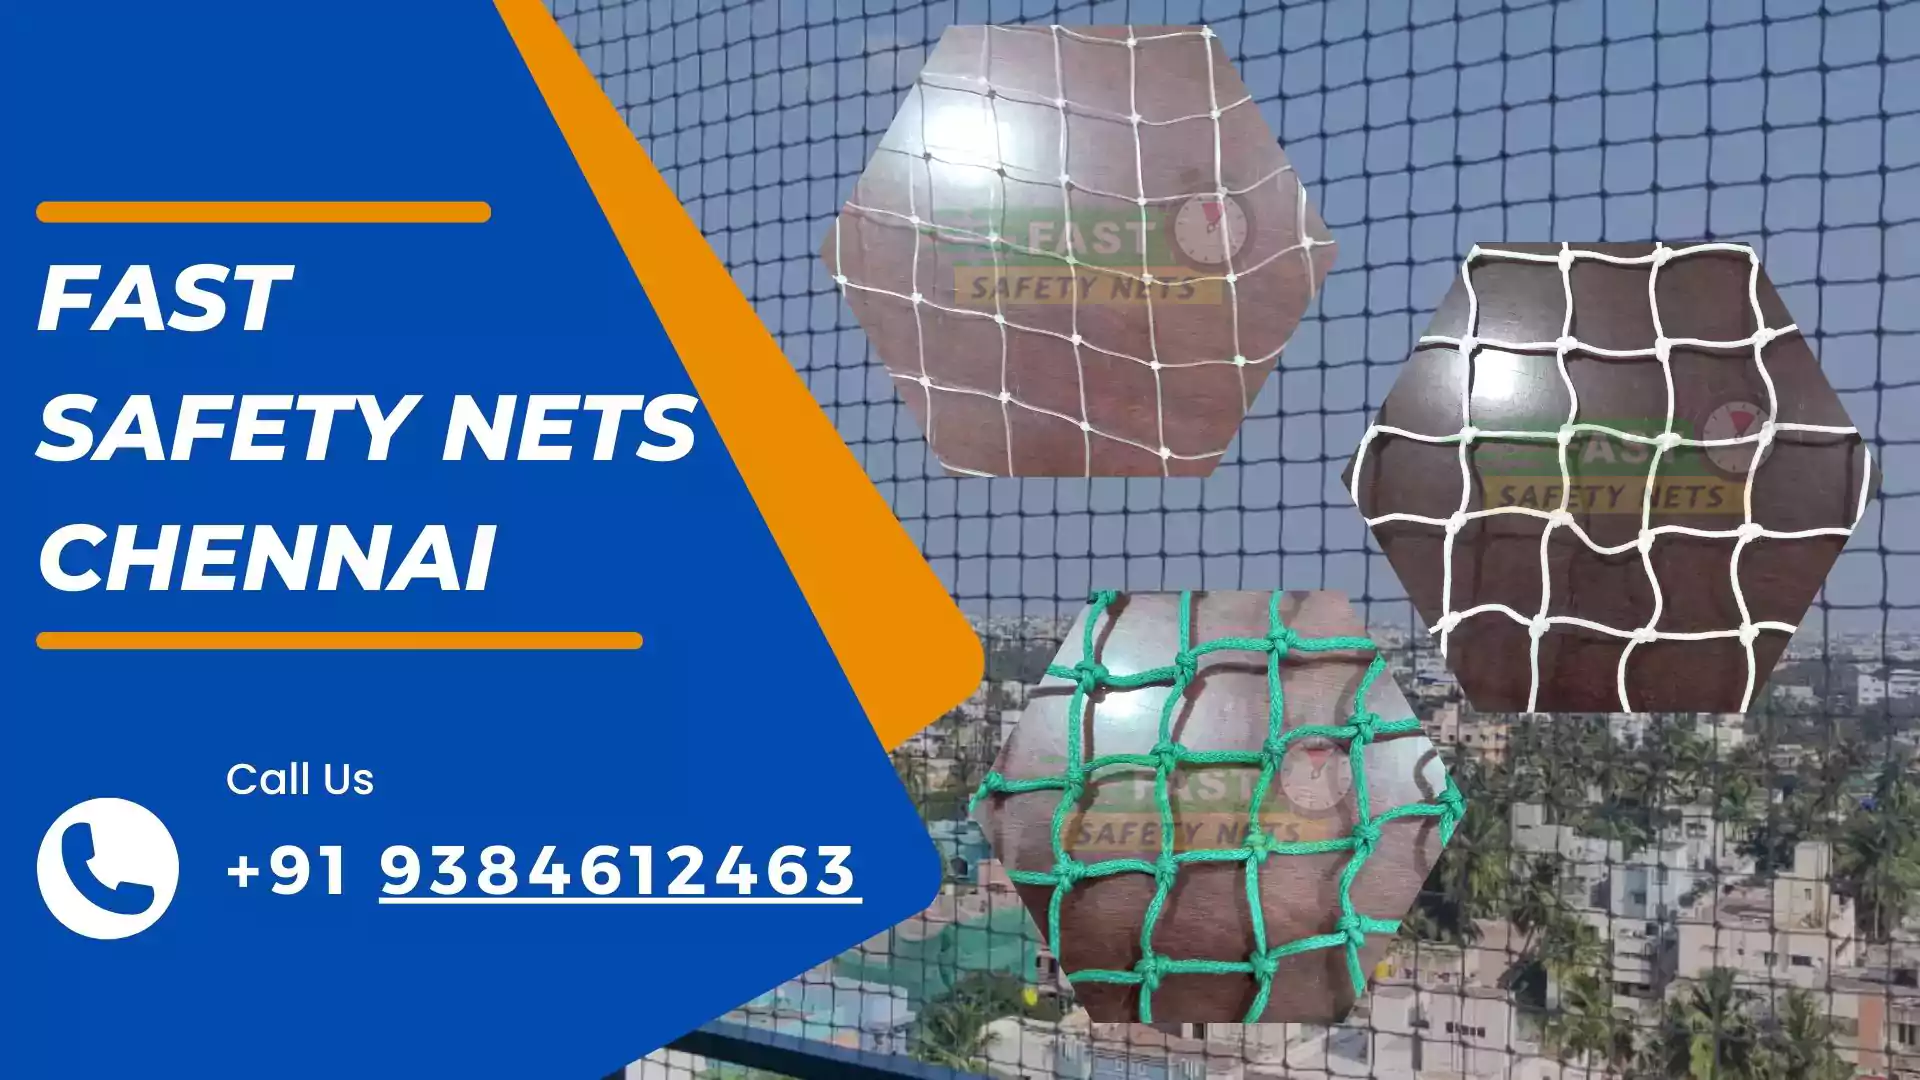 About Fast Safety Nets Chennai